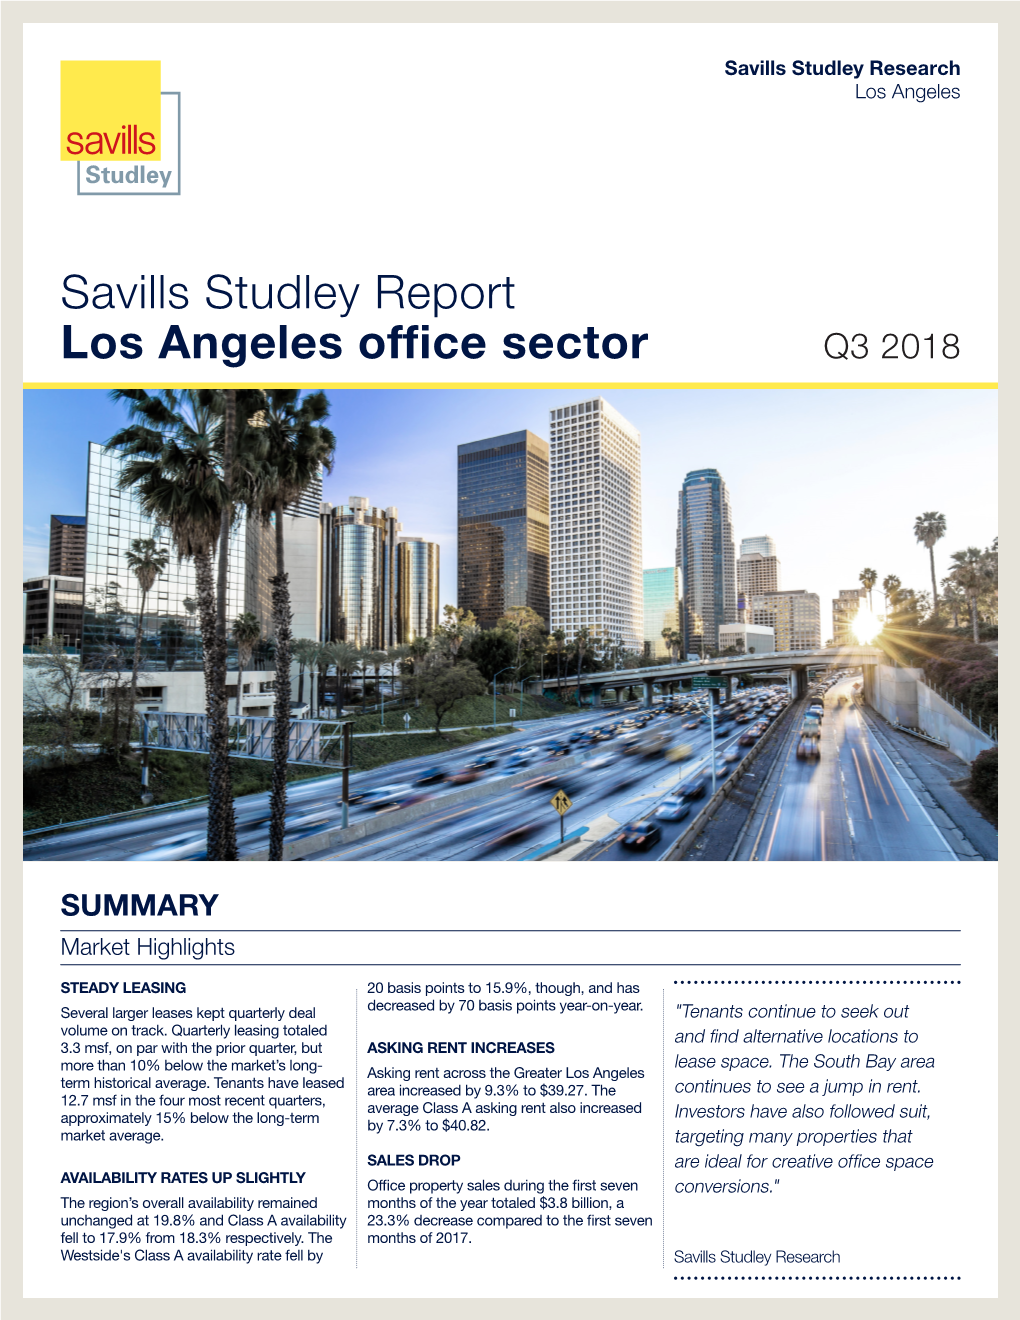 Savills Studley Report Los Angeles Office Sector Q3 2018